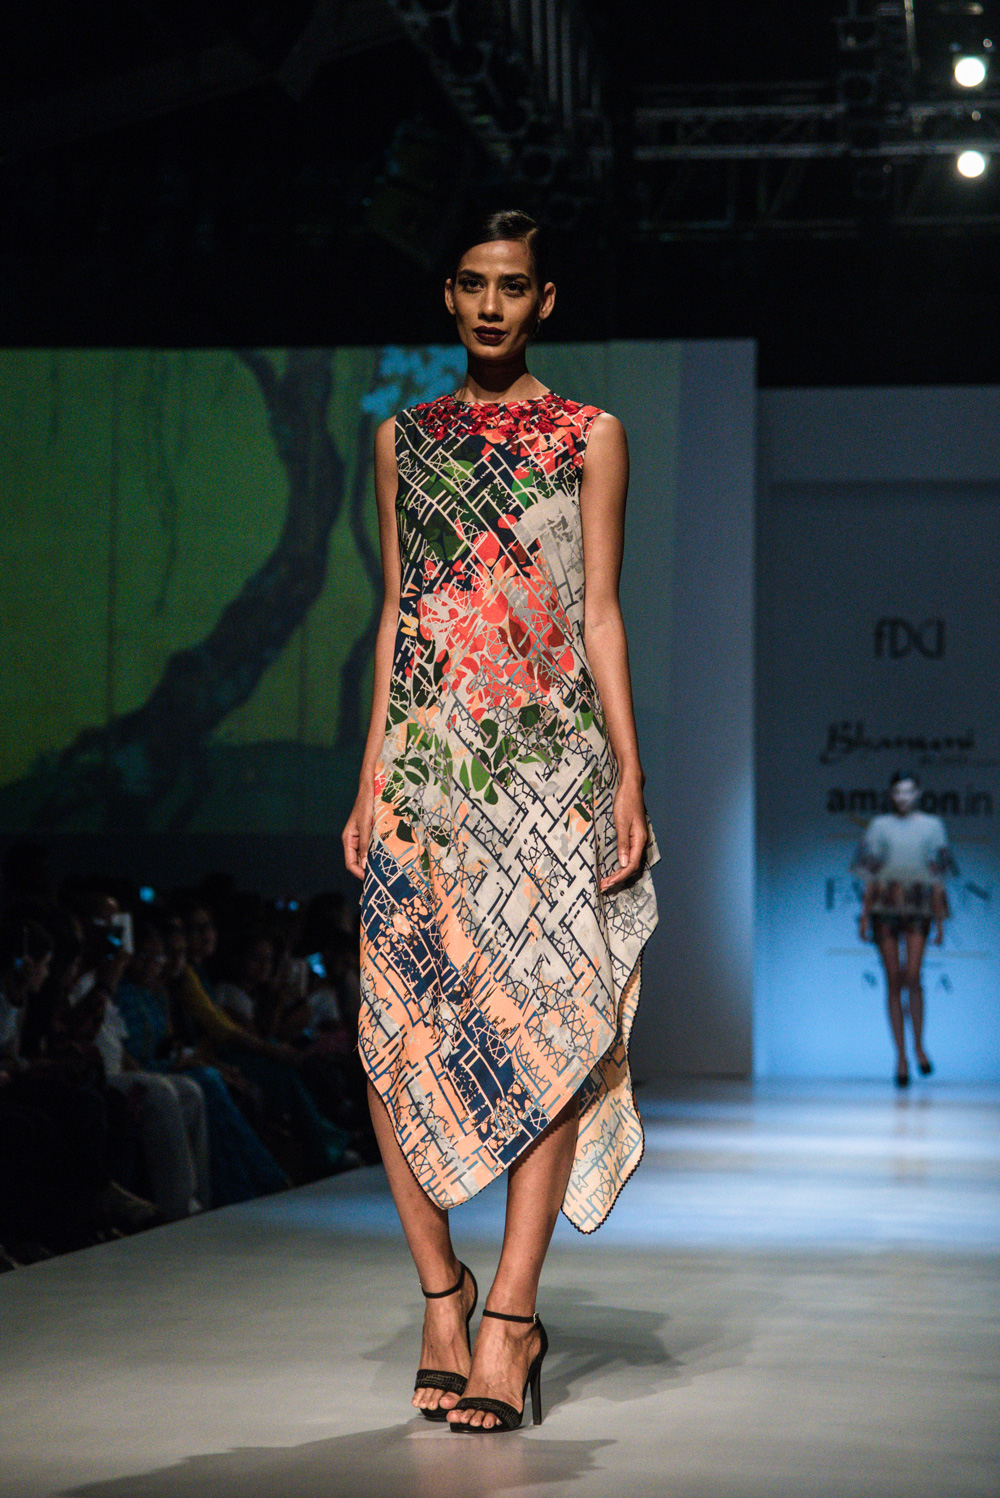 Bhanuni by Jyoti FDCI Amazon India Fashion Week Spring Summer 2018 Look 1